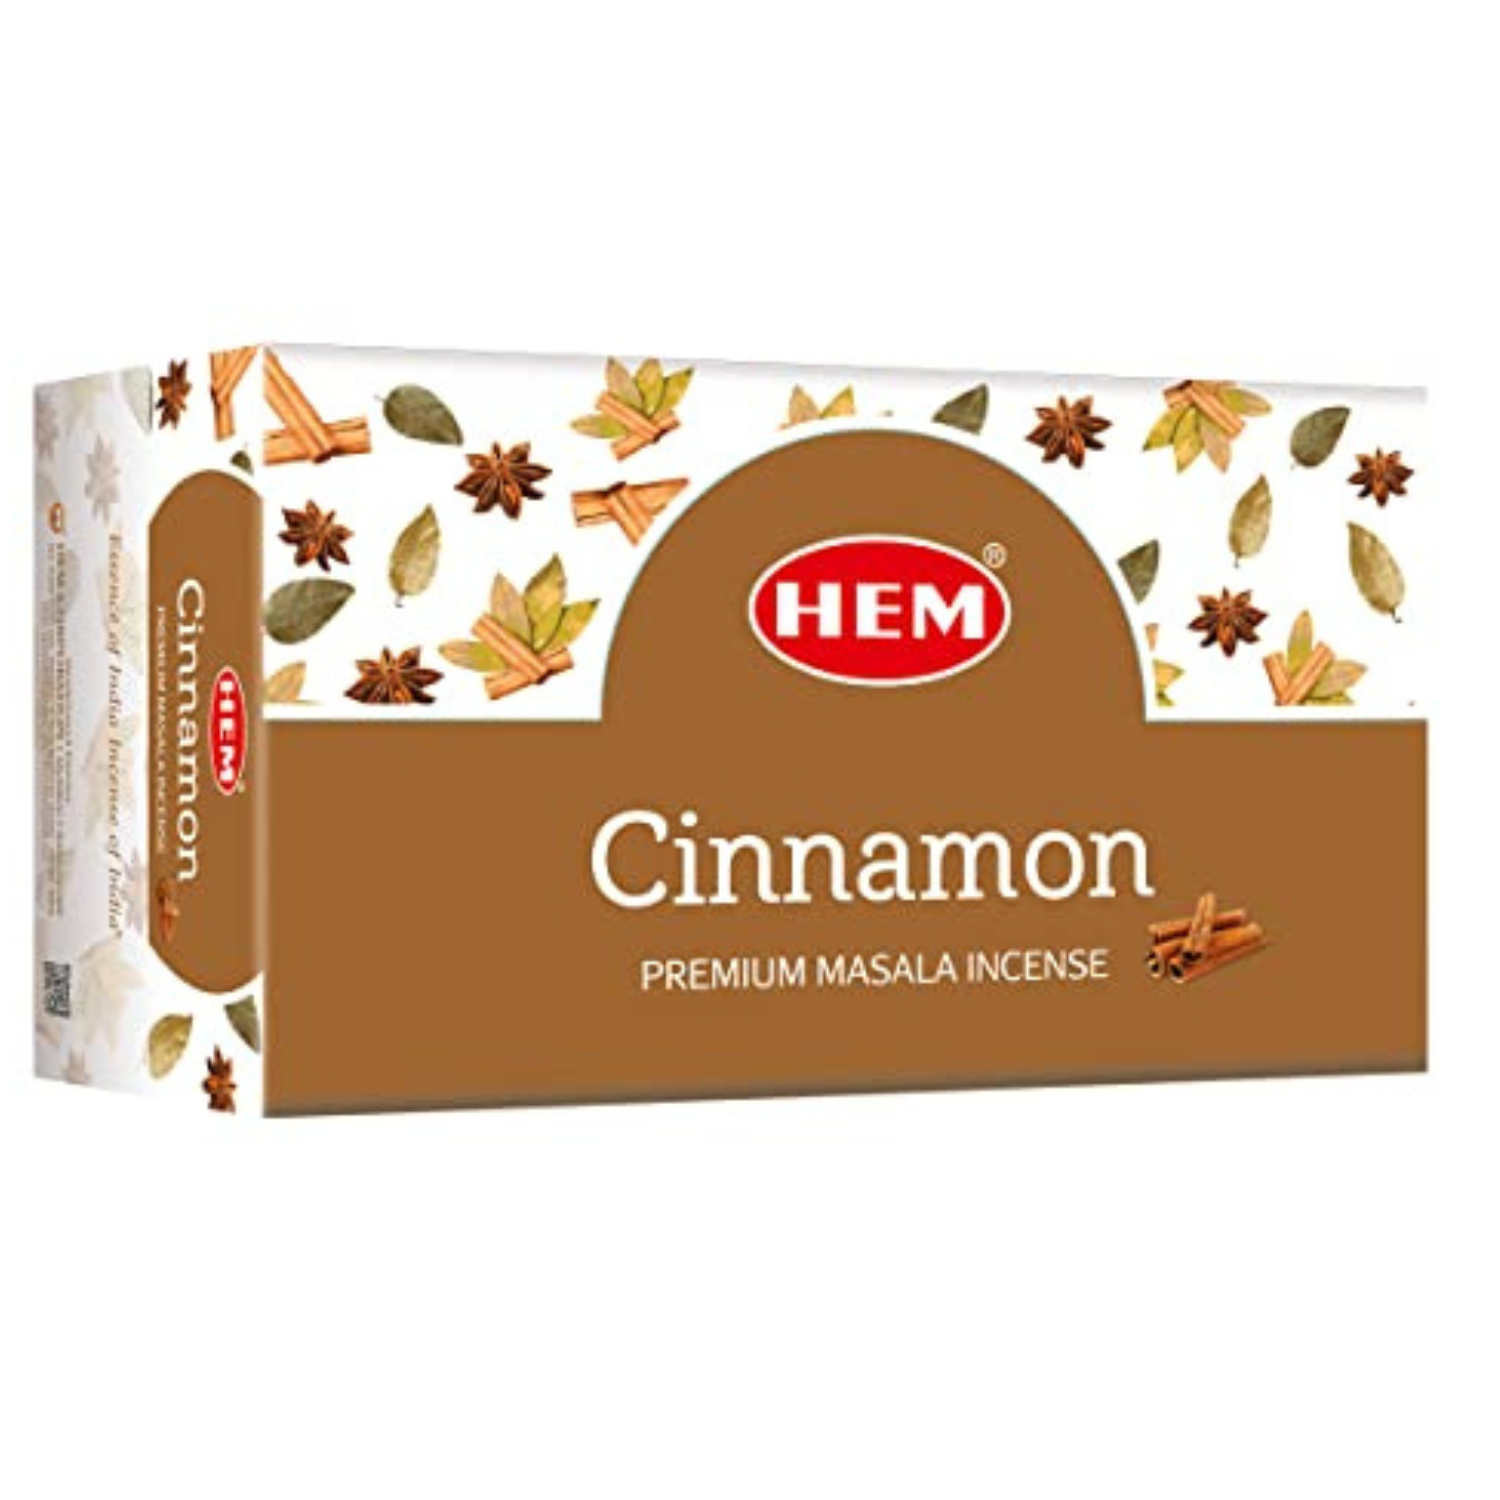 hem-cinnamon-masala-incense-sticks 